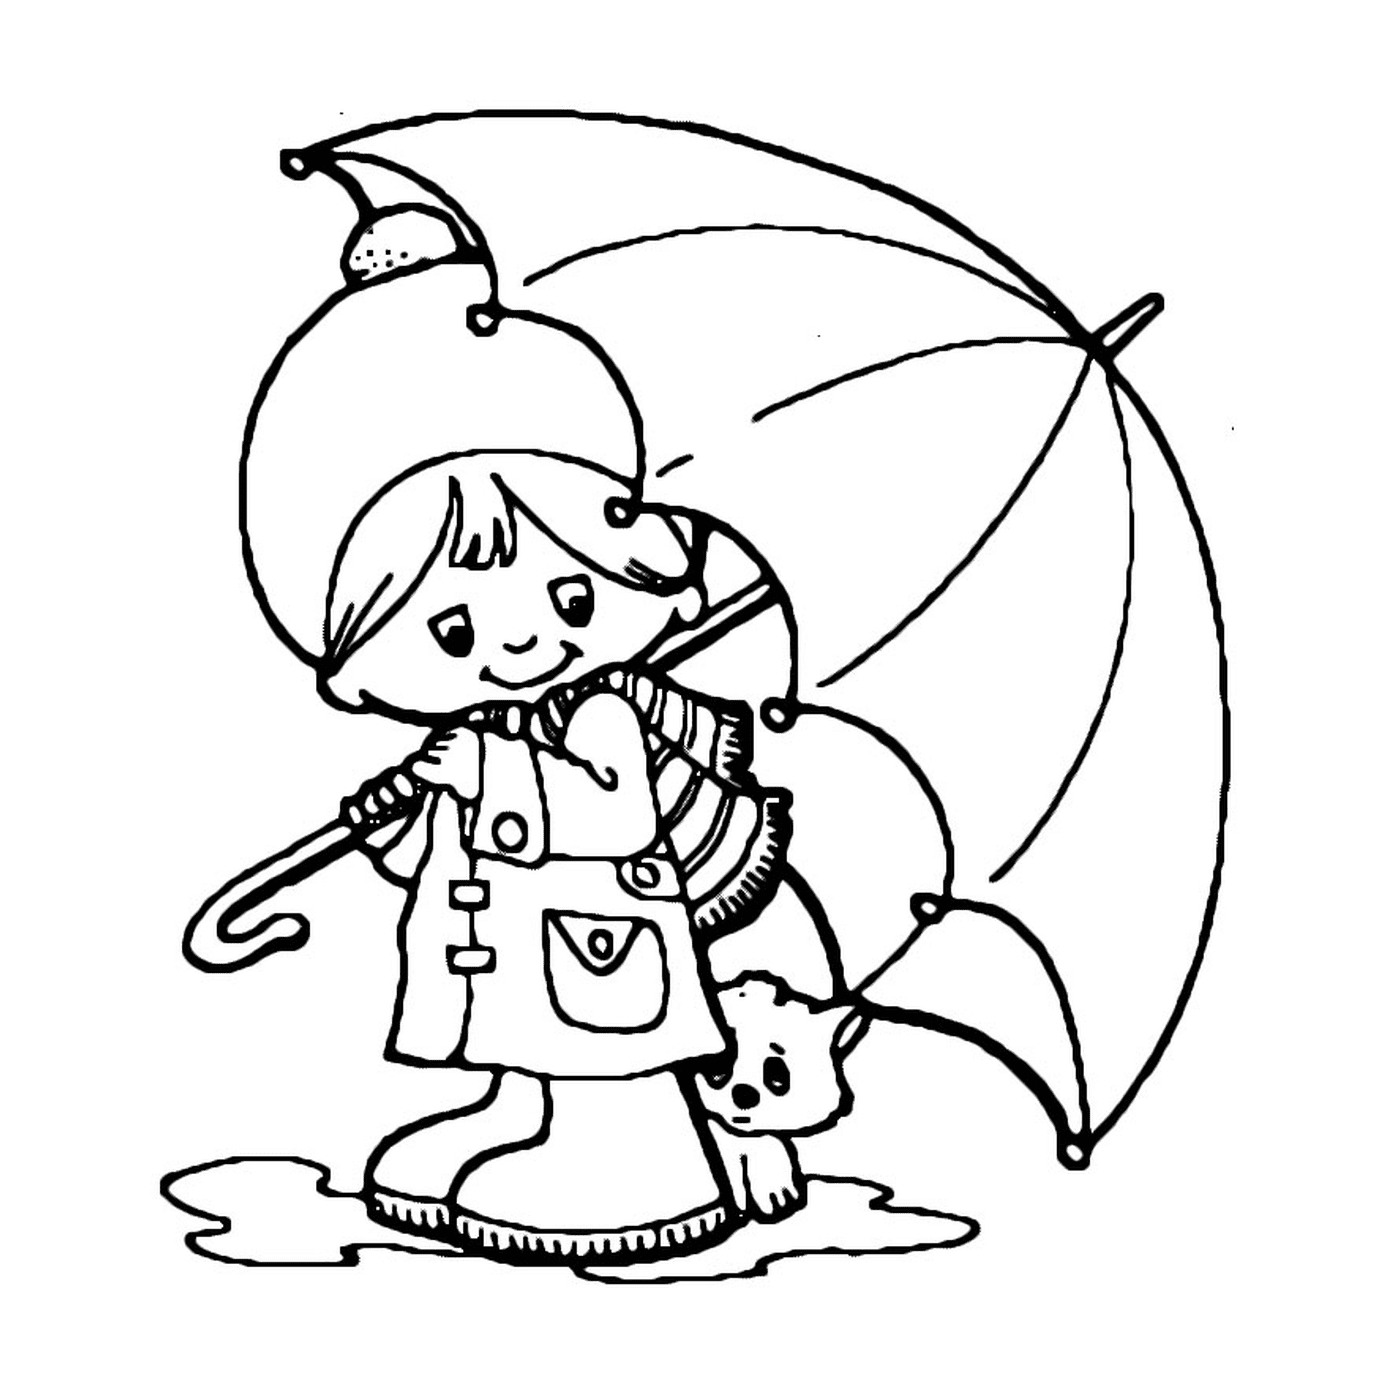  A little boy and his dog under an umbrella 